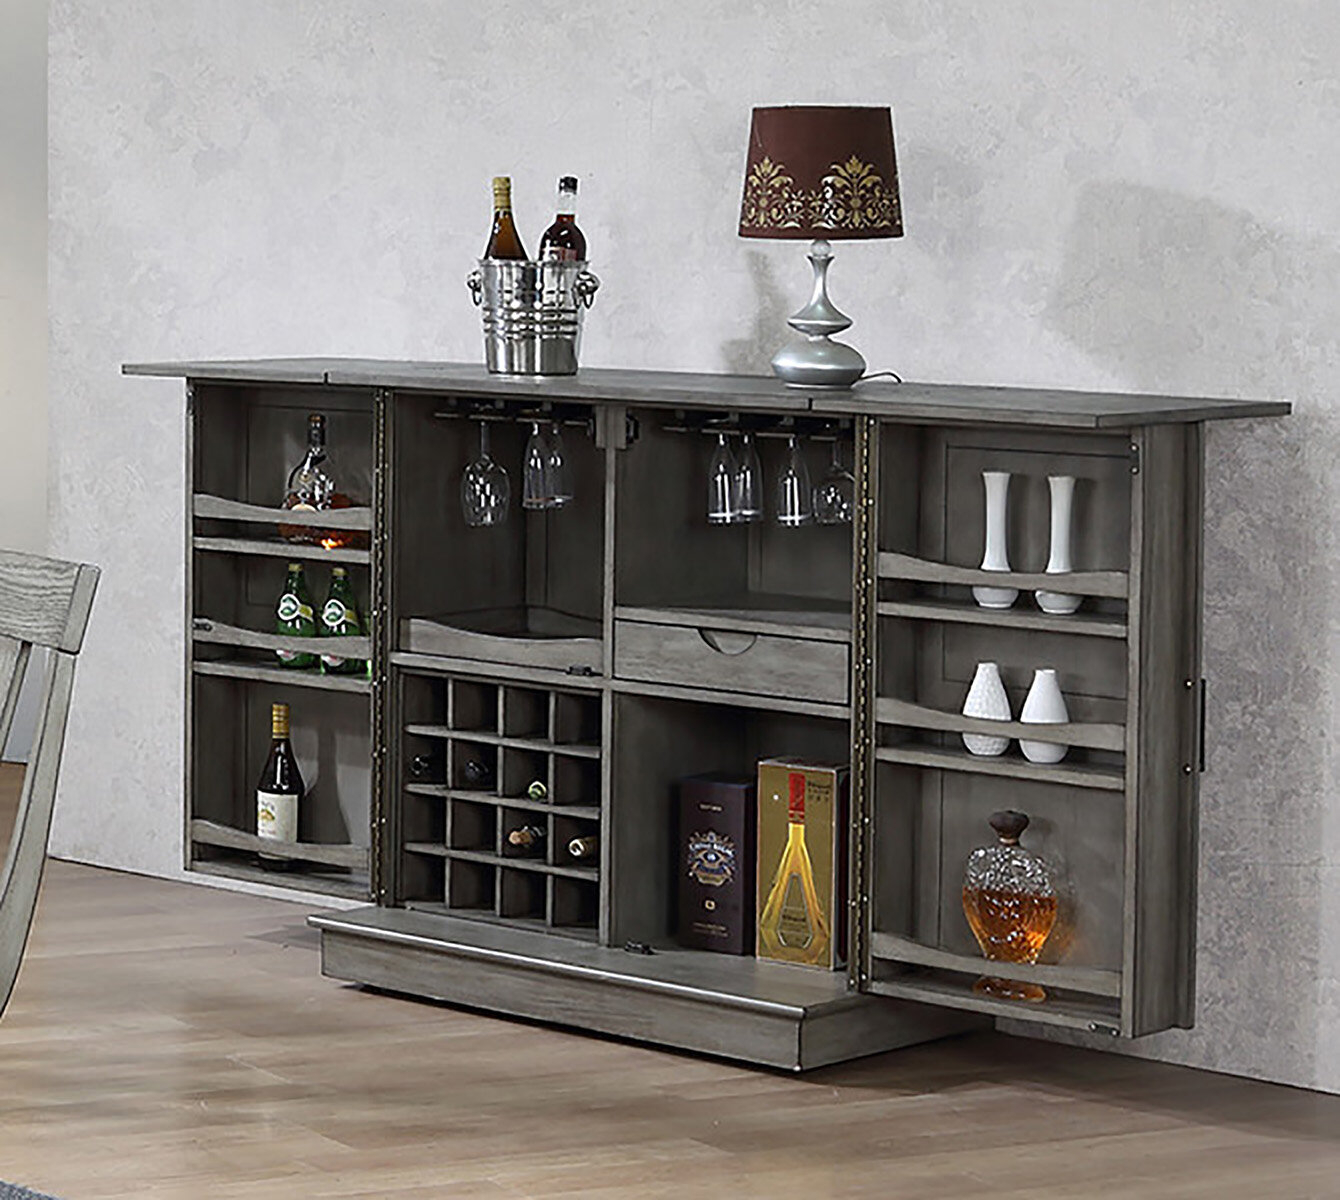 Ophelia Co Vergara Expandable Bar Cabinet Reviews Wayfair within size 1340 X 1200